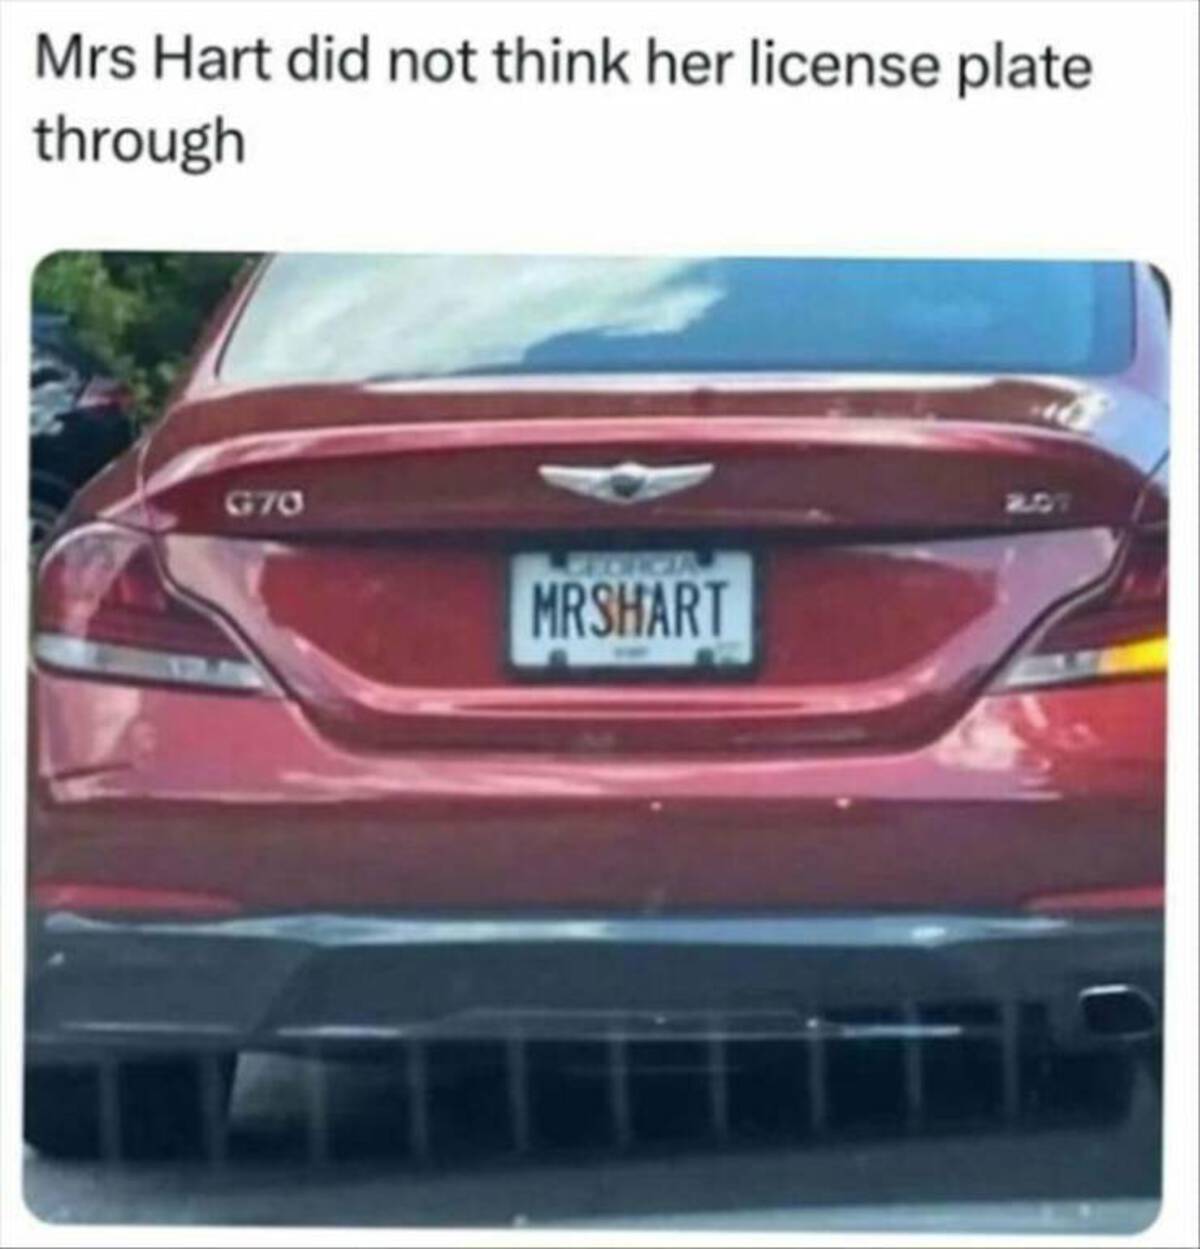 mr shart meme - Mrs Hart did not think her license plate through G70 Forgia Mrshart